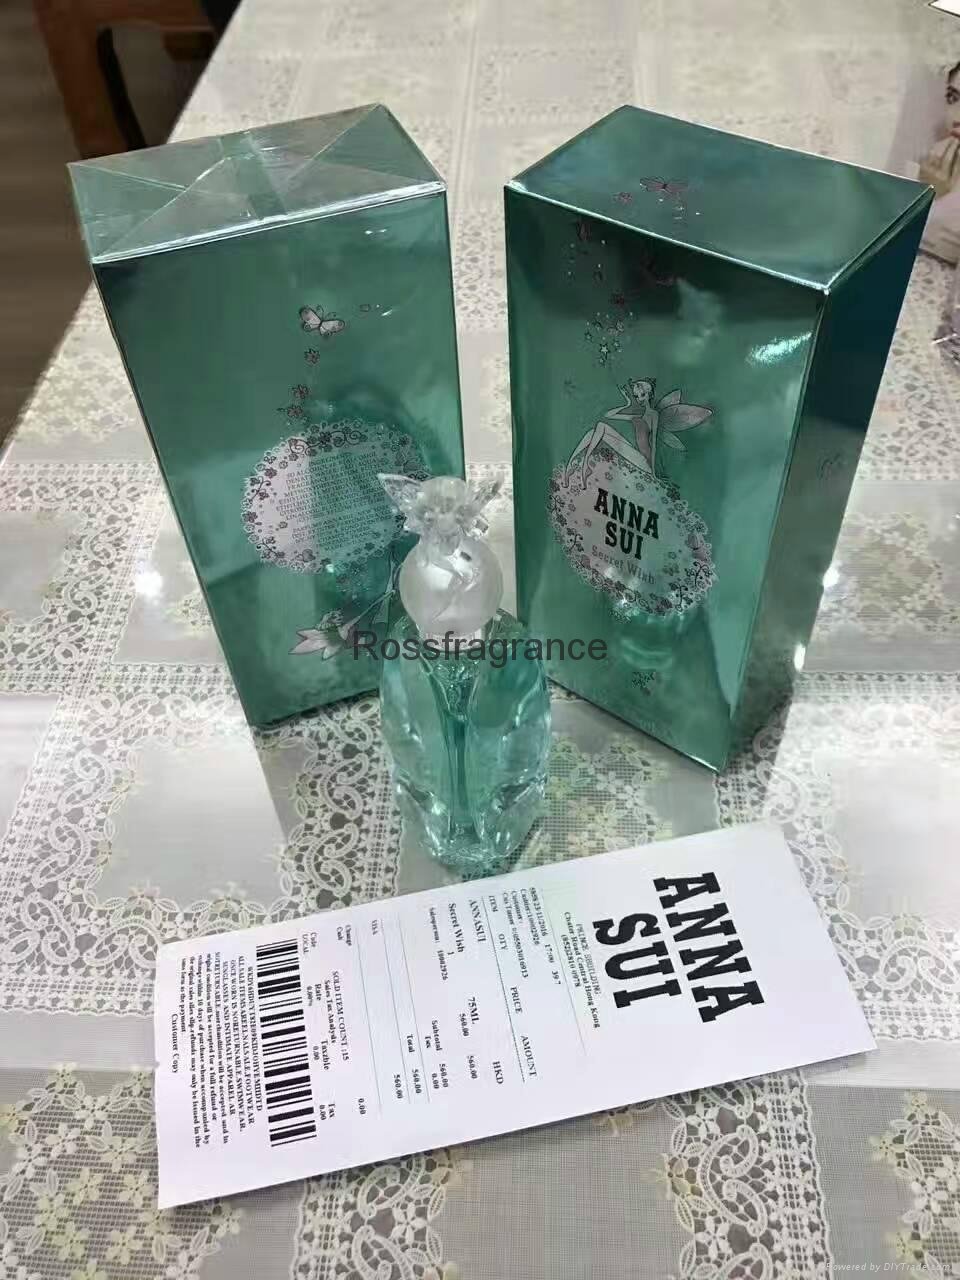 Hot sale Glass bottle perfume Anna sui perfume 100ml  2